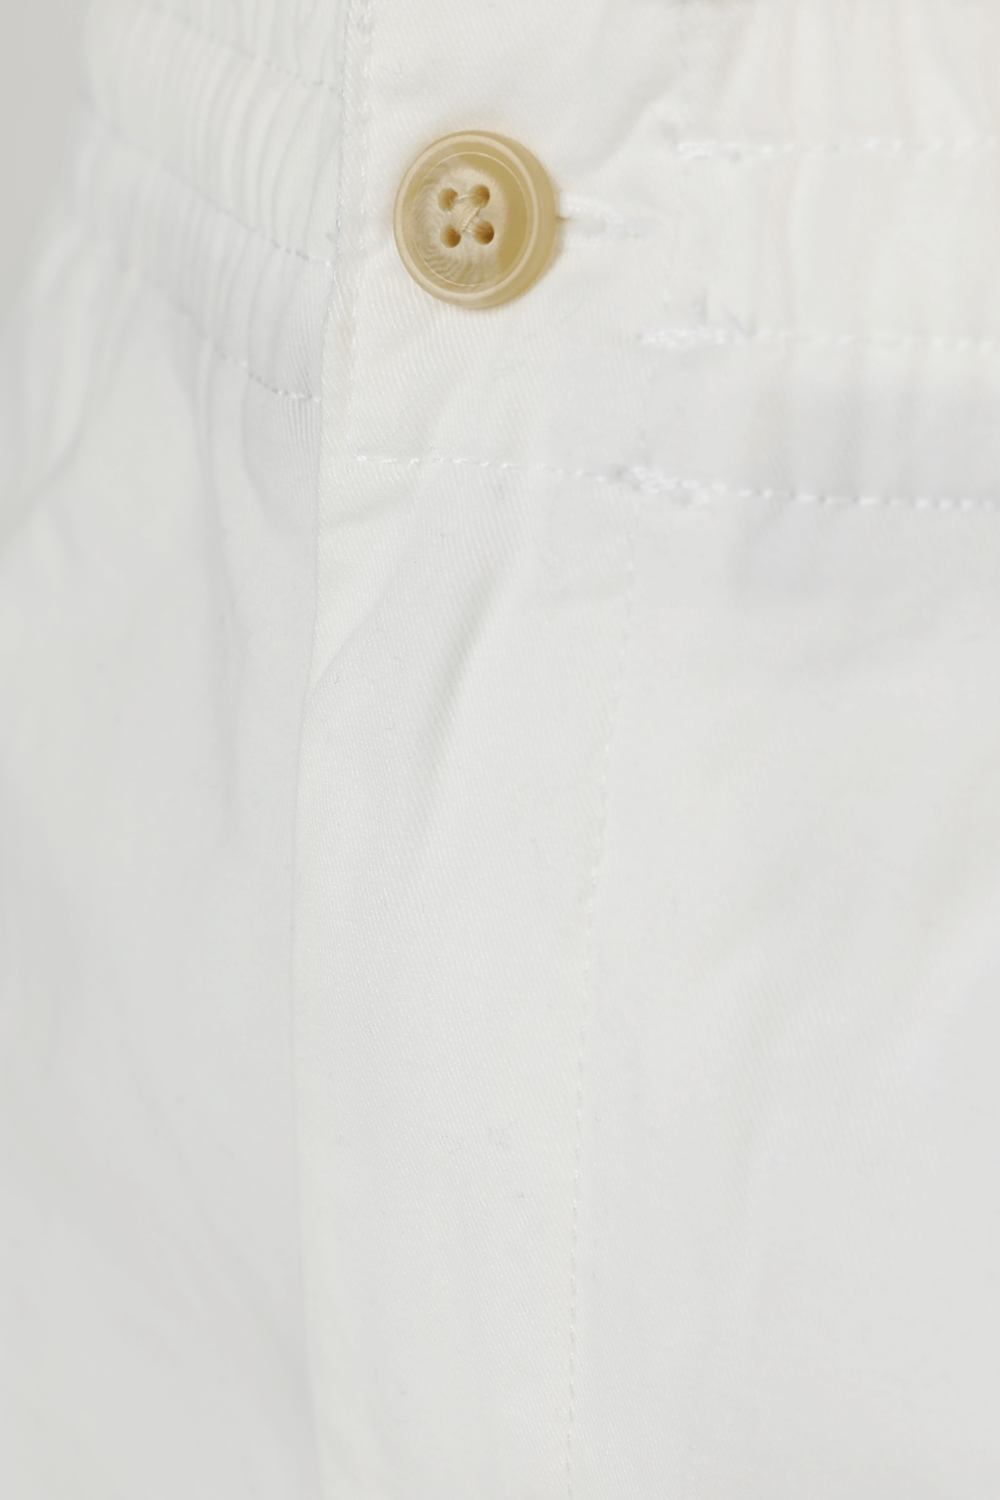 Cotton Flat Shorts in White POLO RALPH LAUREN